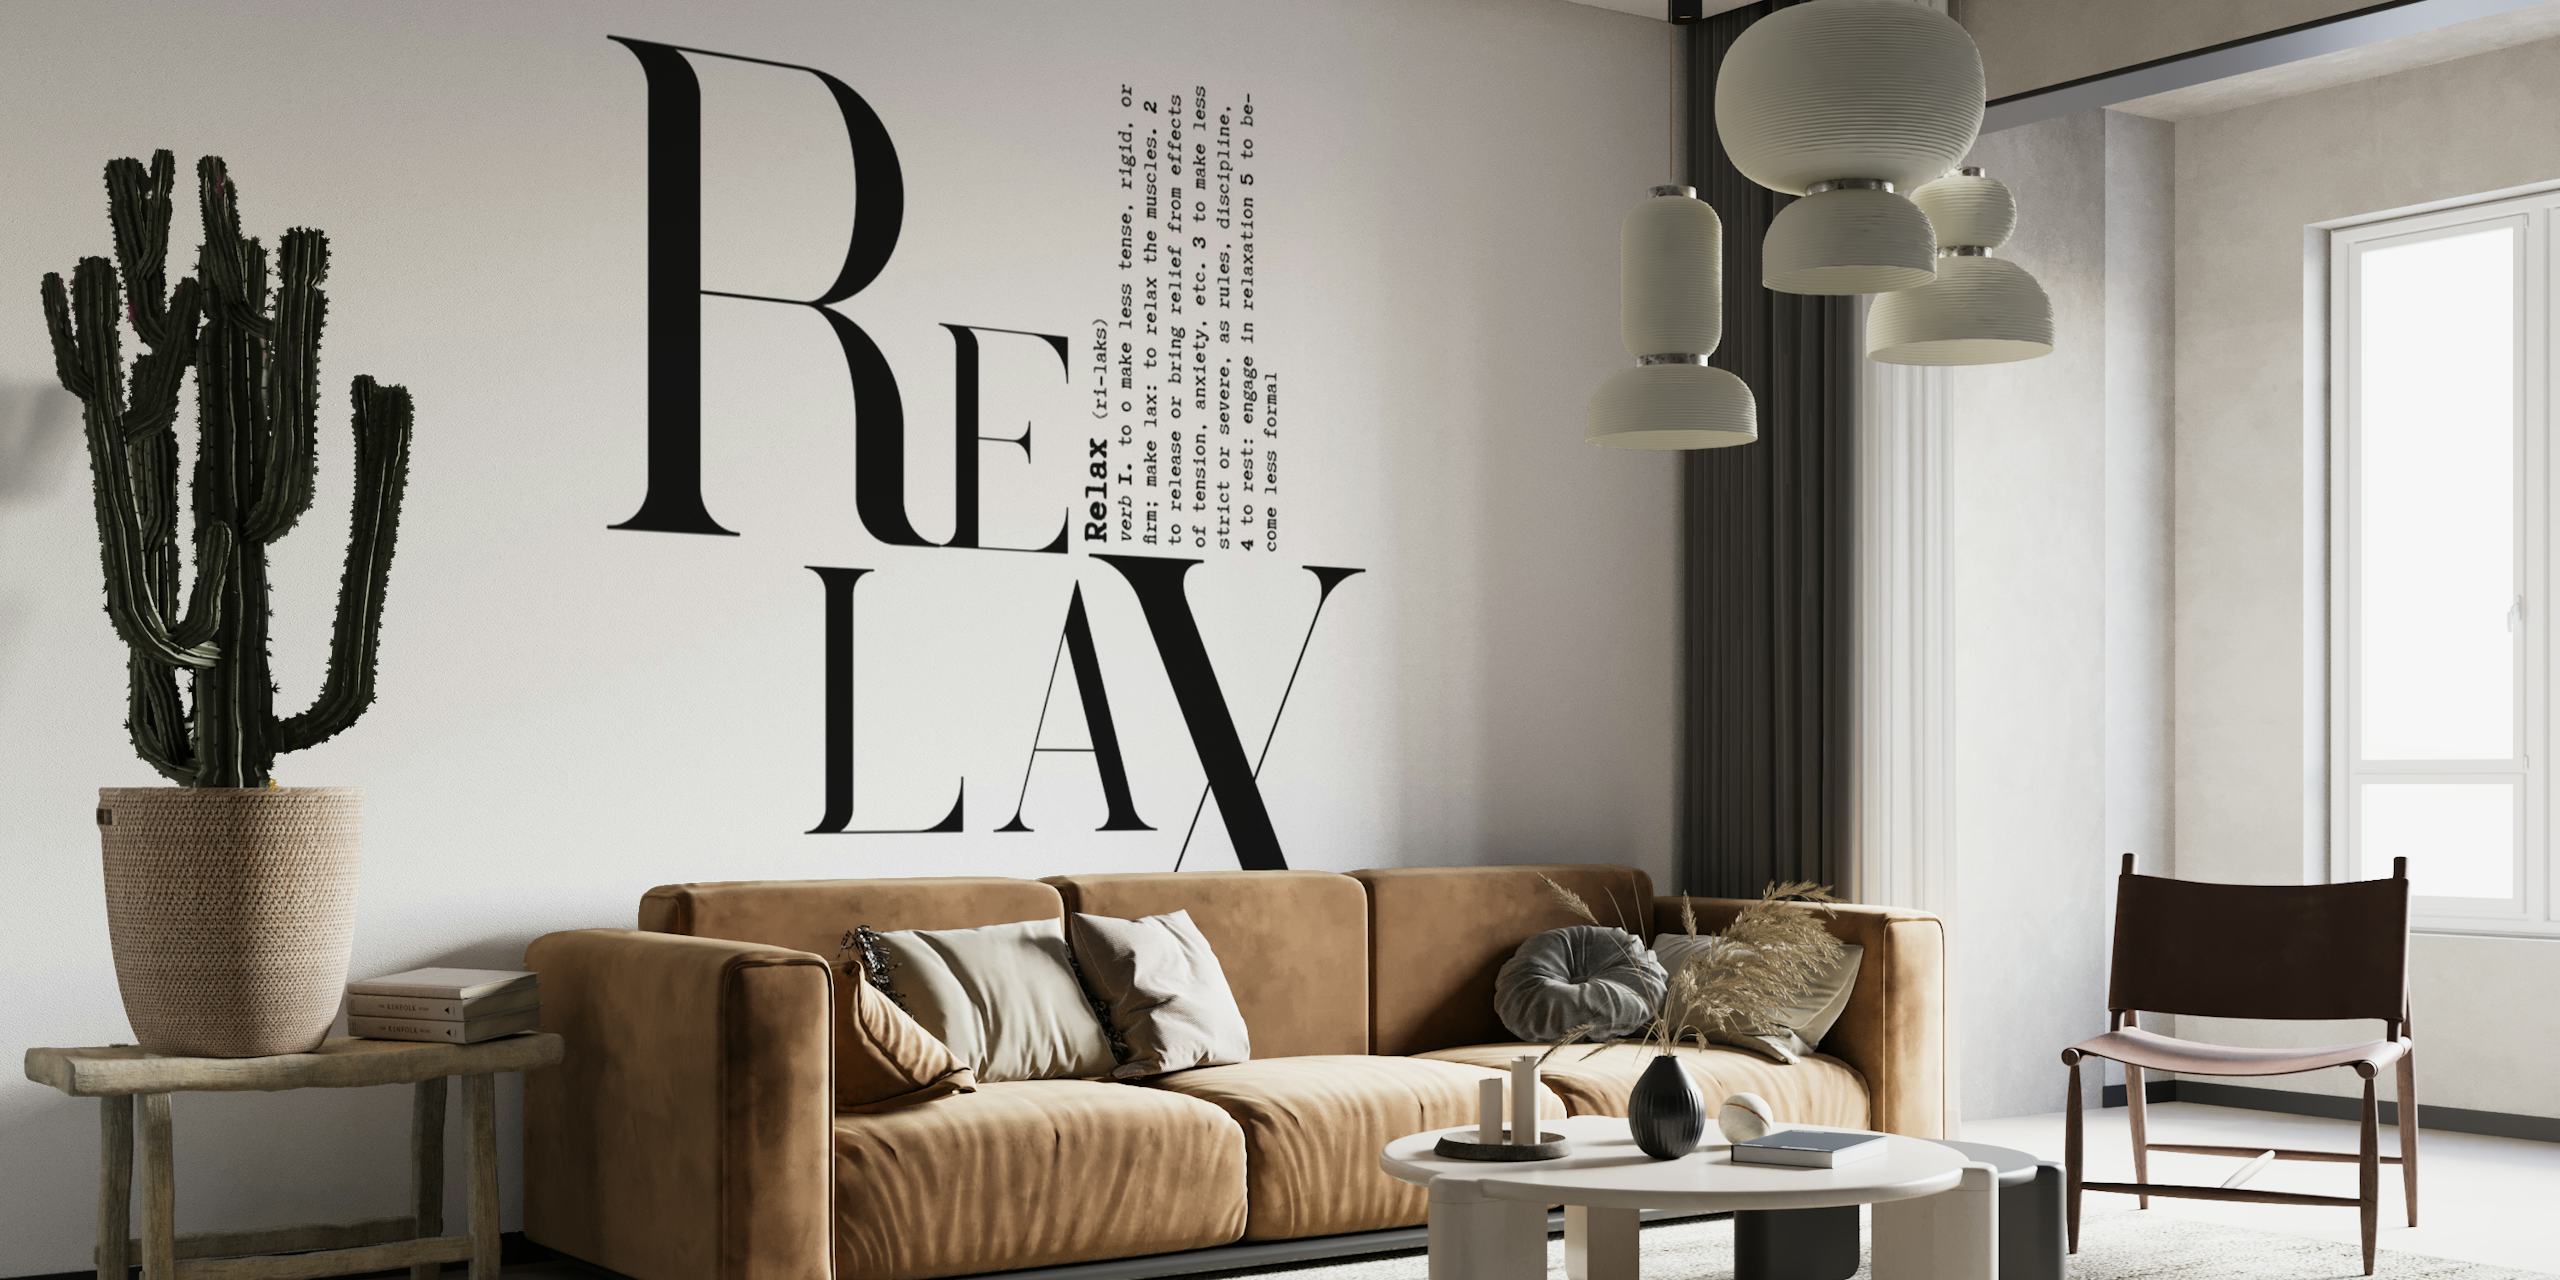 Svart och vit typografisk tapet med ordet "RELAX" i ett kreativt typsnitt